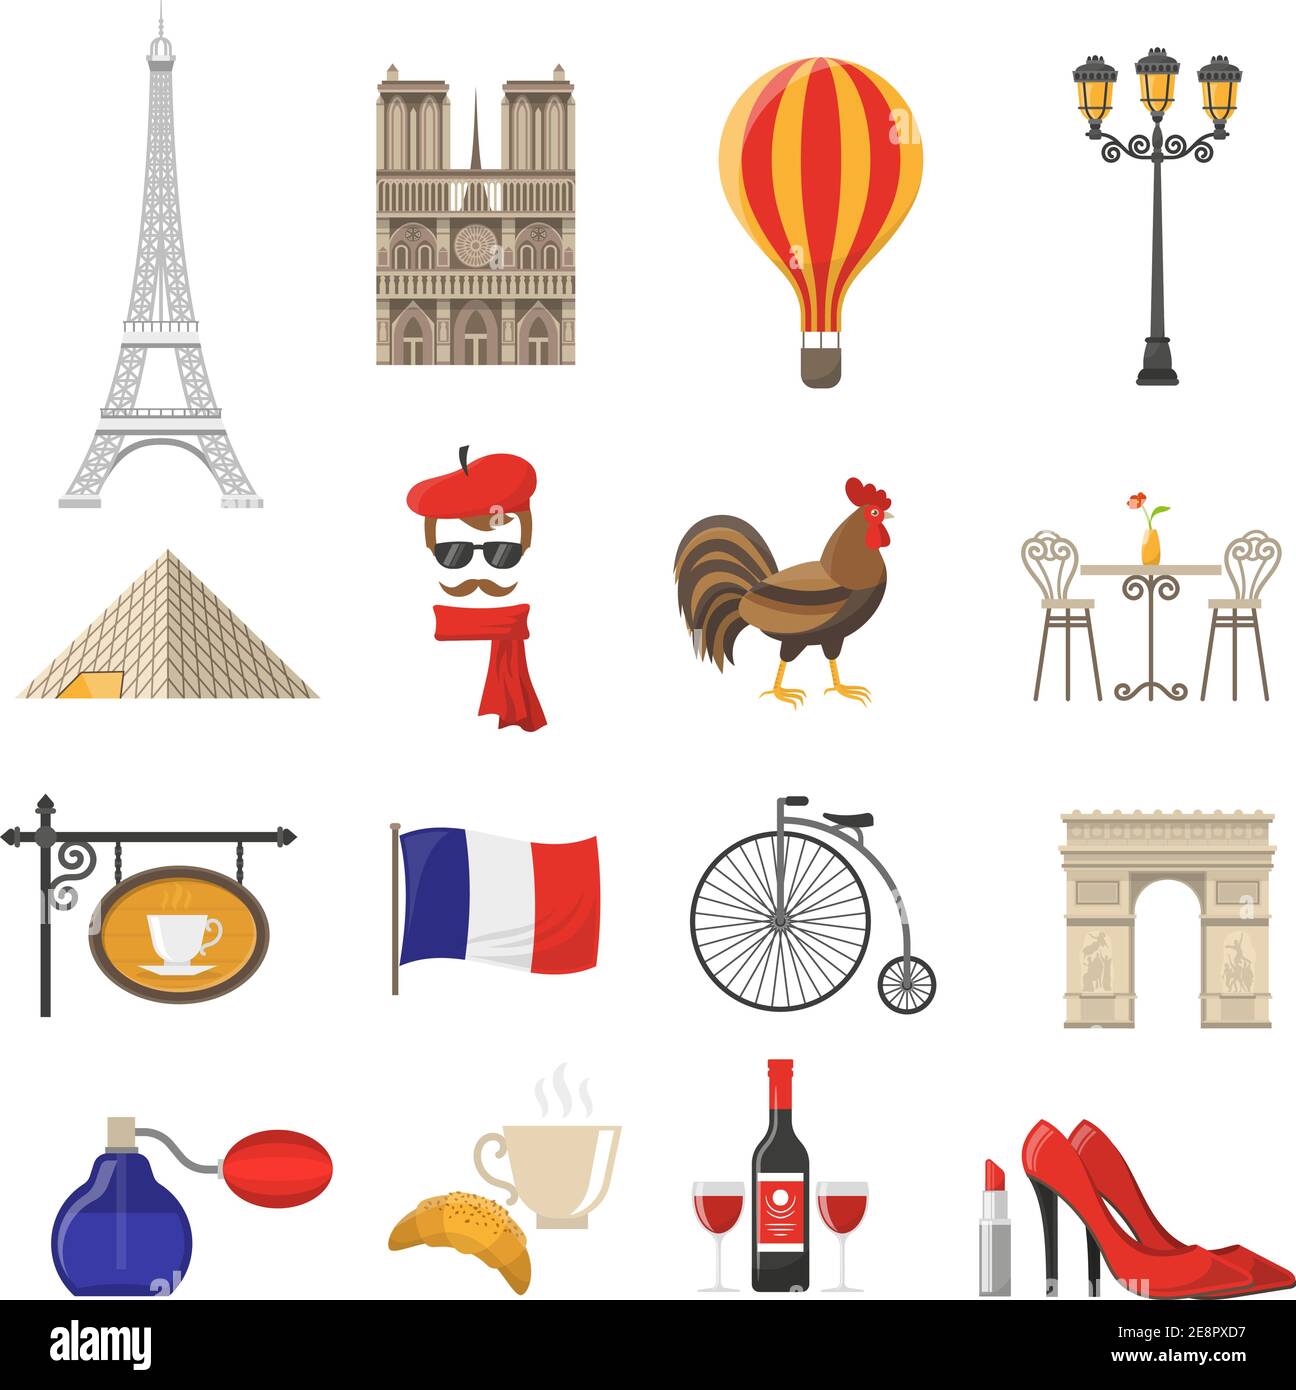 Frankreich Icons Set.Frankreich Vektor Illustration.Frankreich Flache Symbole.Paris Design Set. Paris Elements Kollektion. Stock Vektor